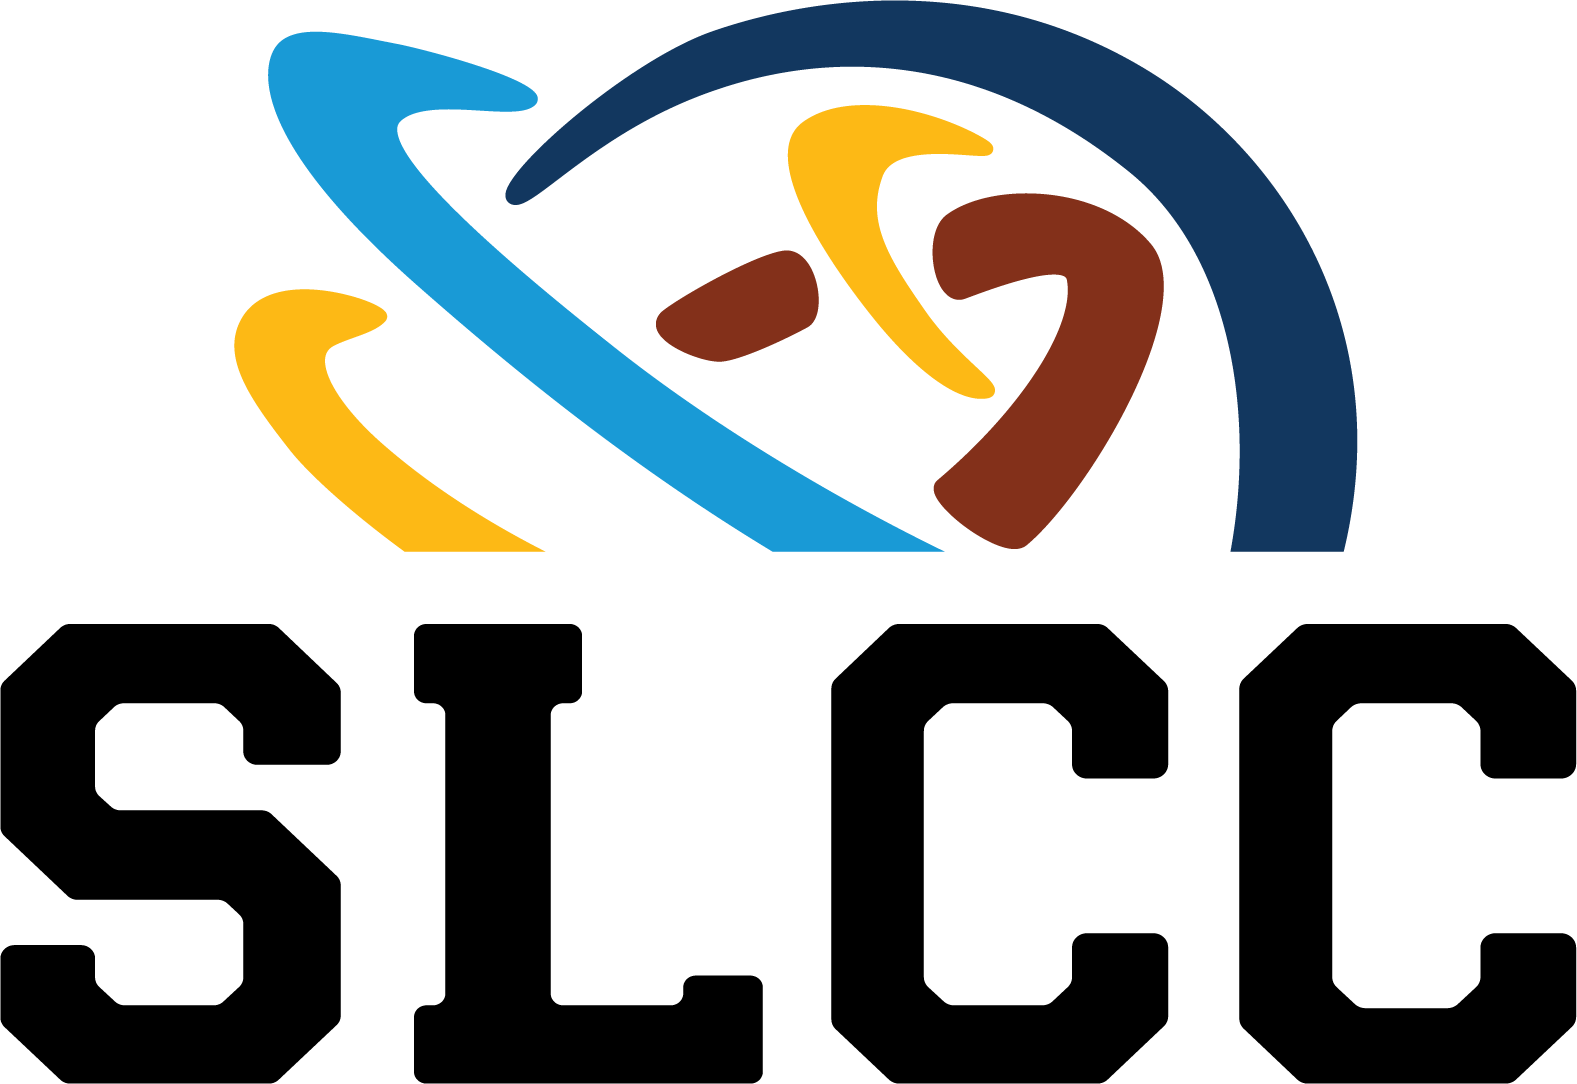 SLCC Logo - College Symbols